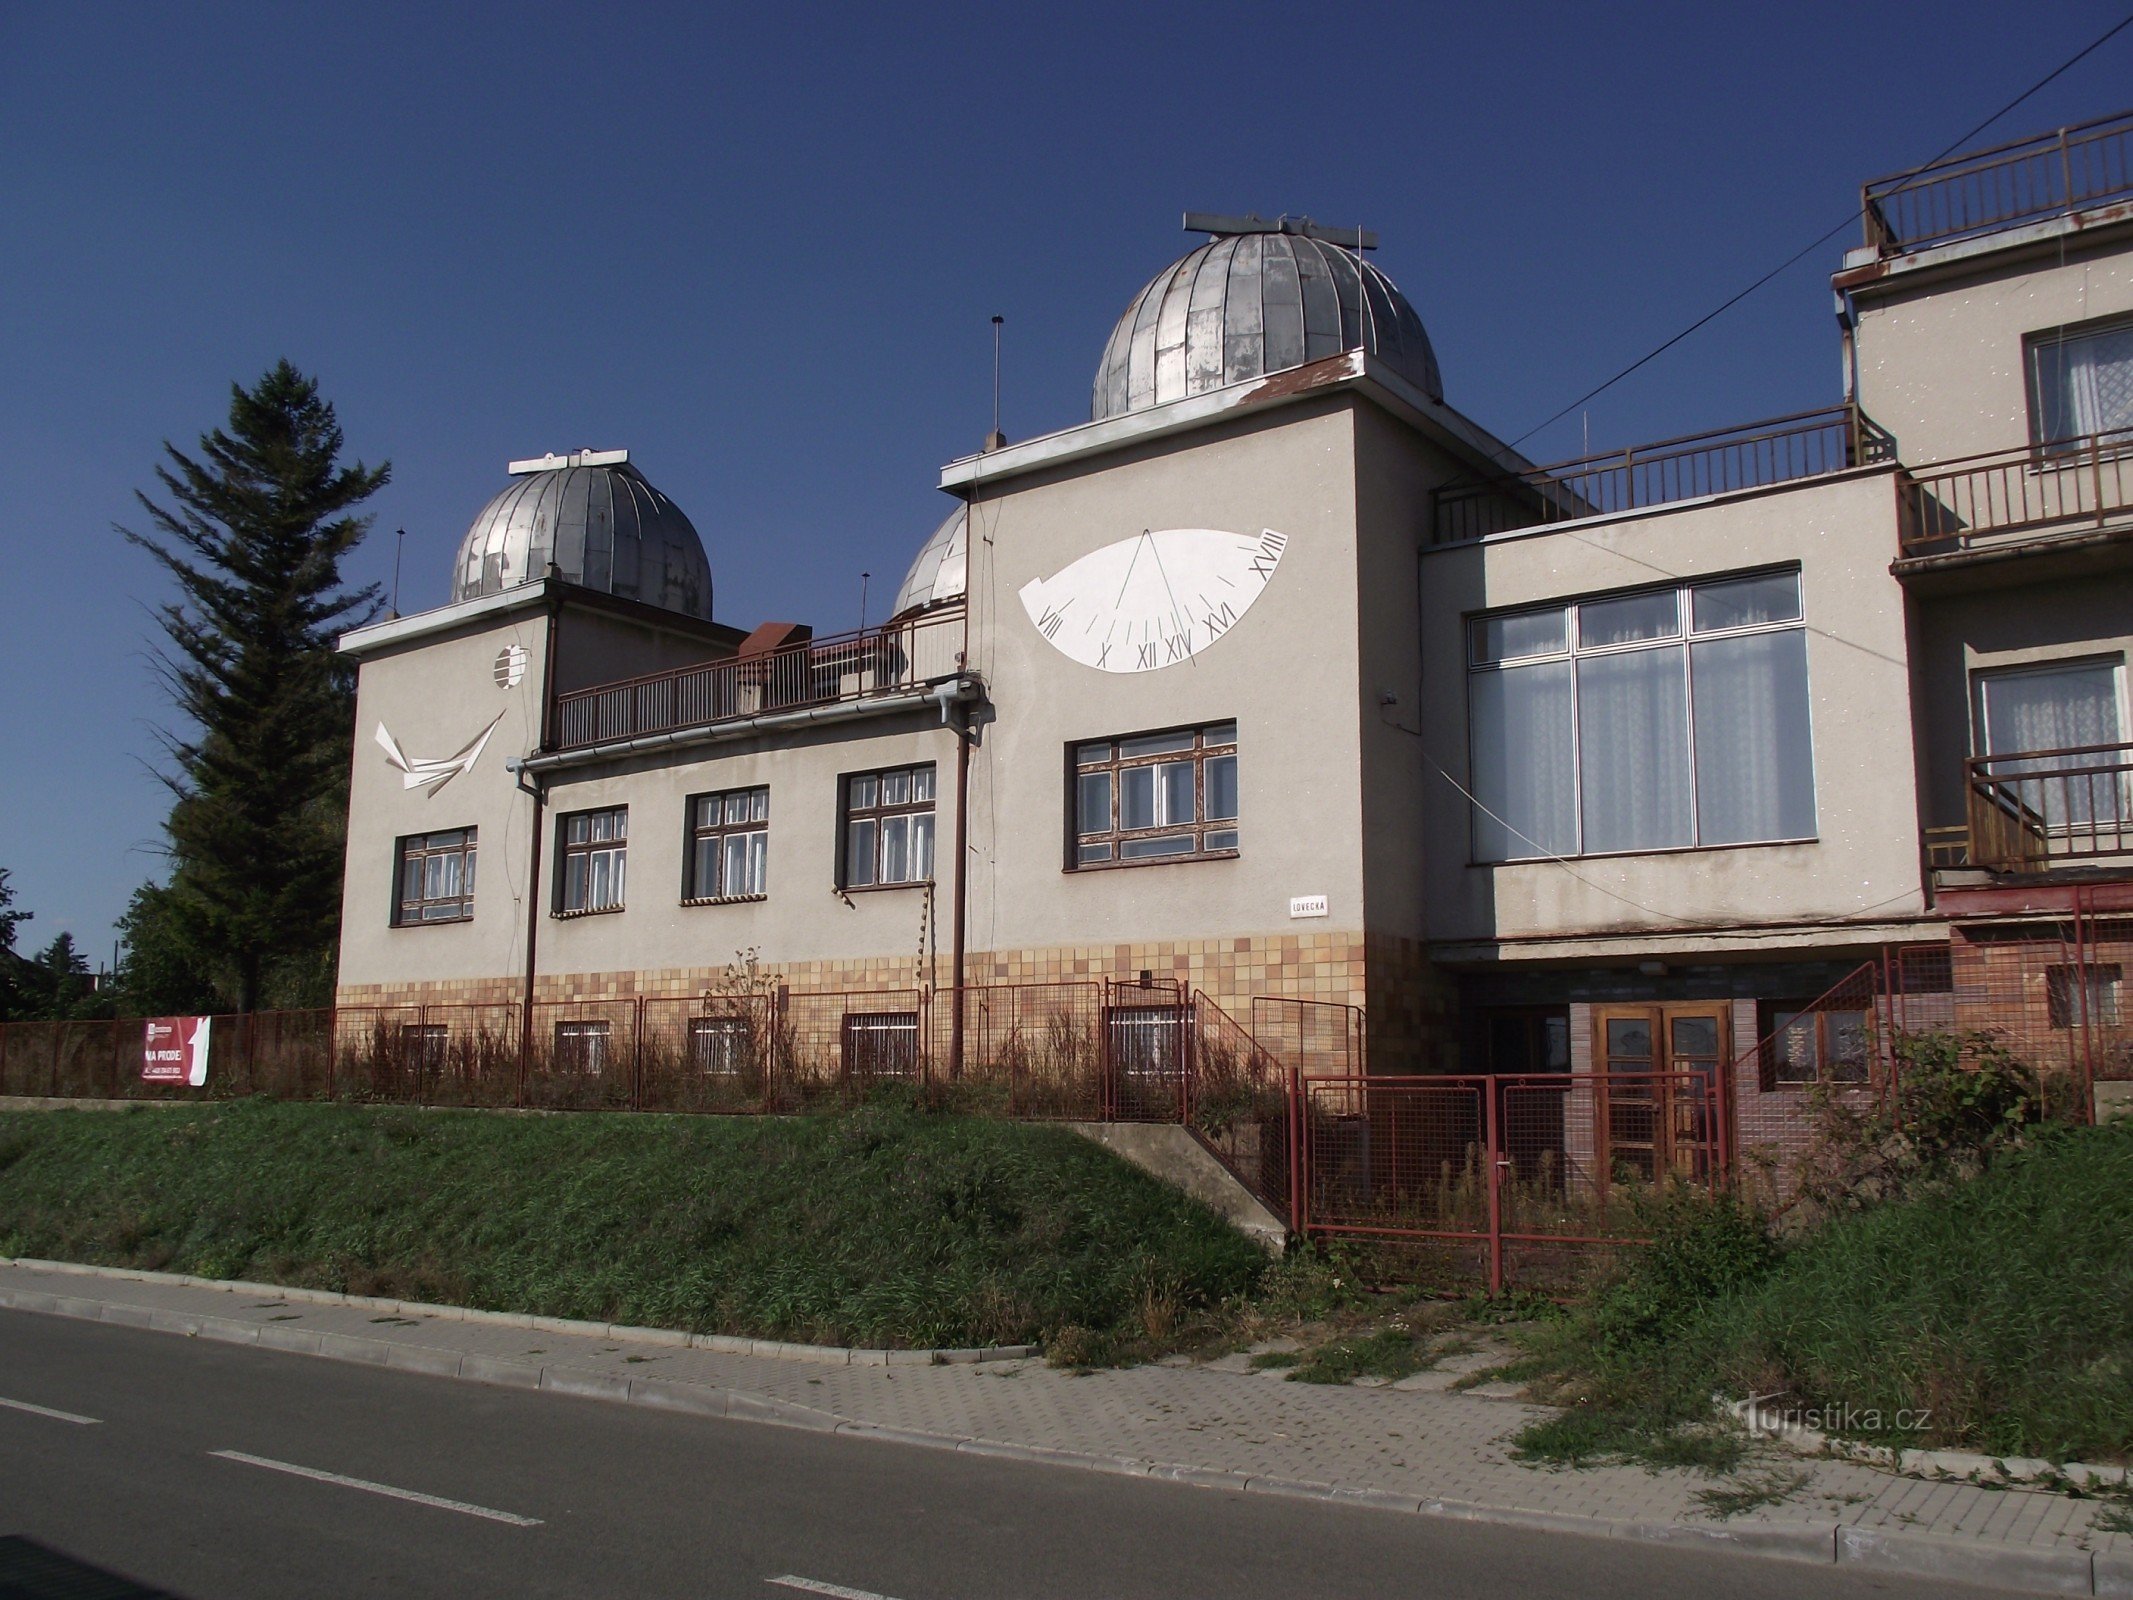 Ždánice - обсерваторія